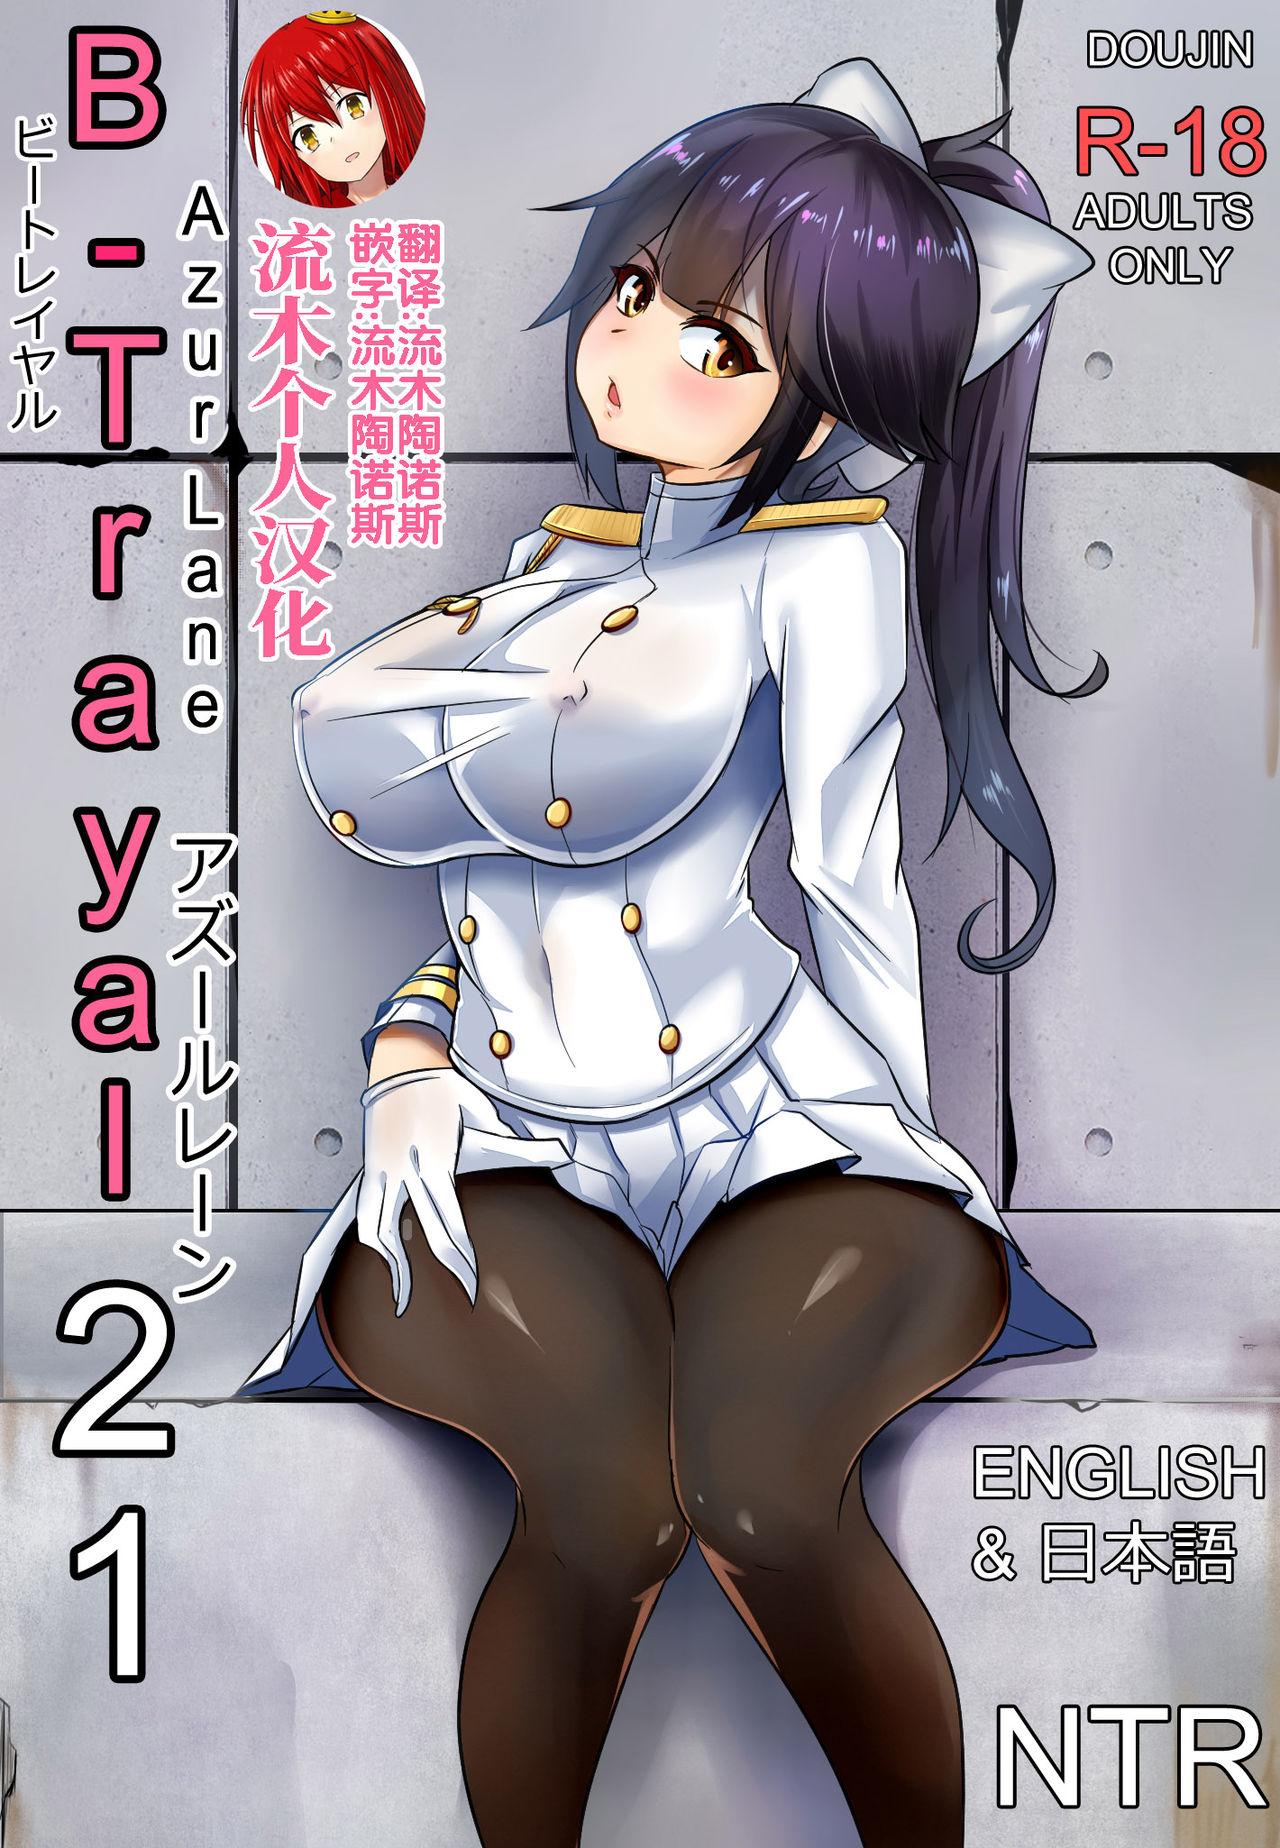 Erotic B-Trayal 21 高雄 - Azur lane Cdzinha - Picture 1